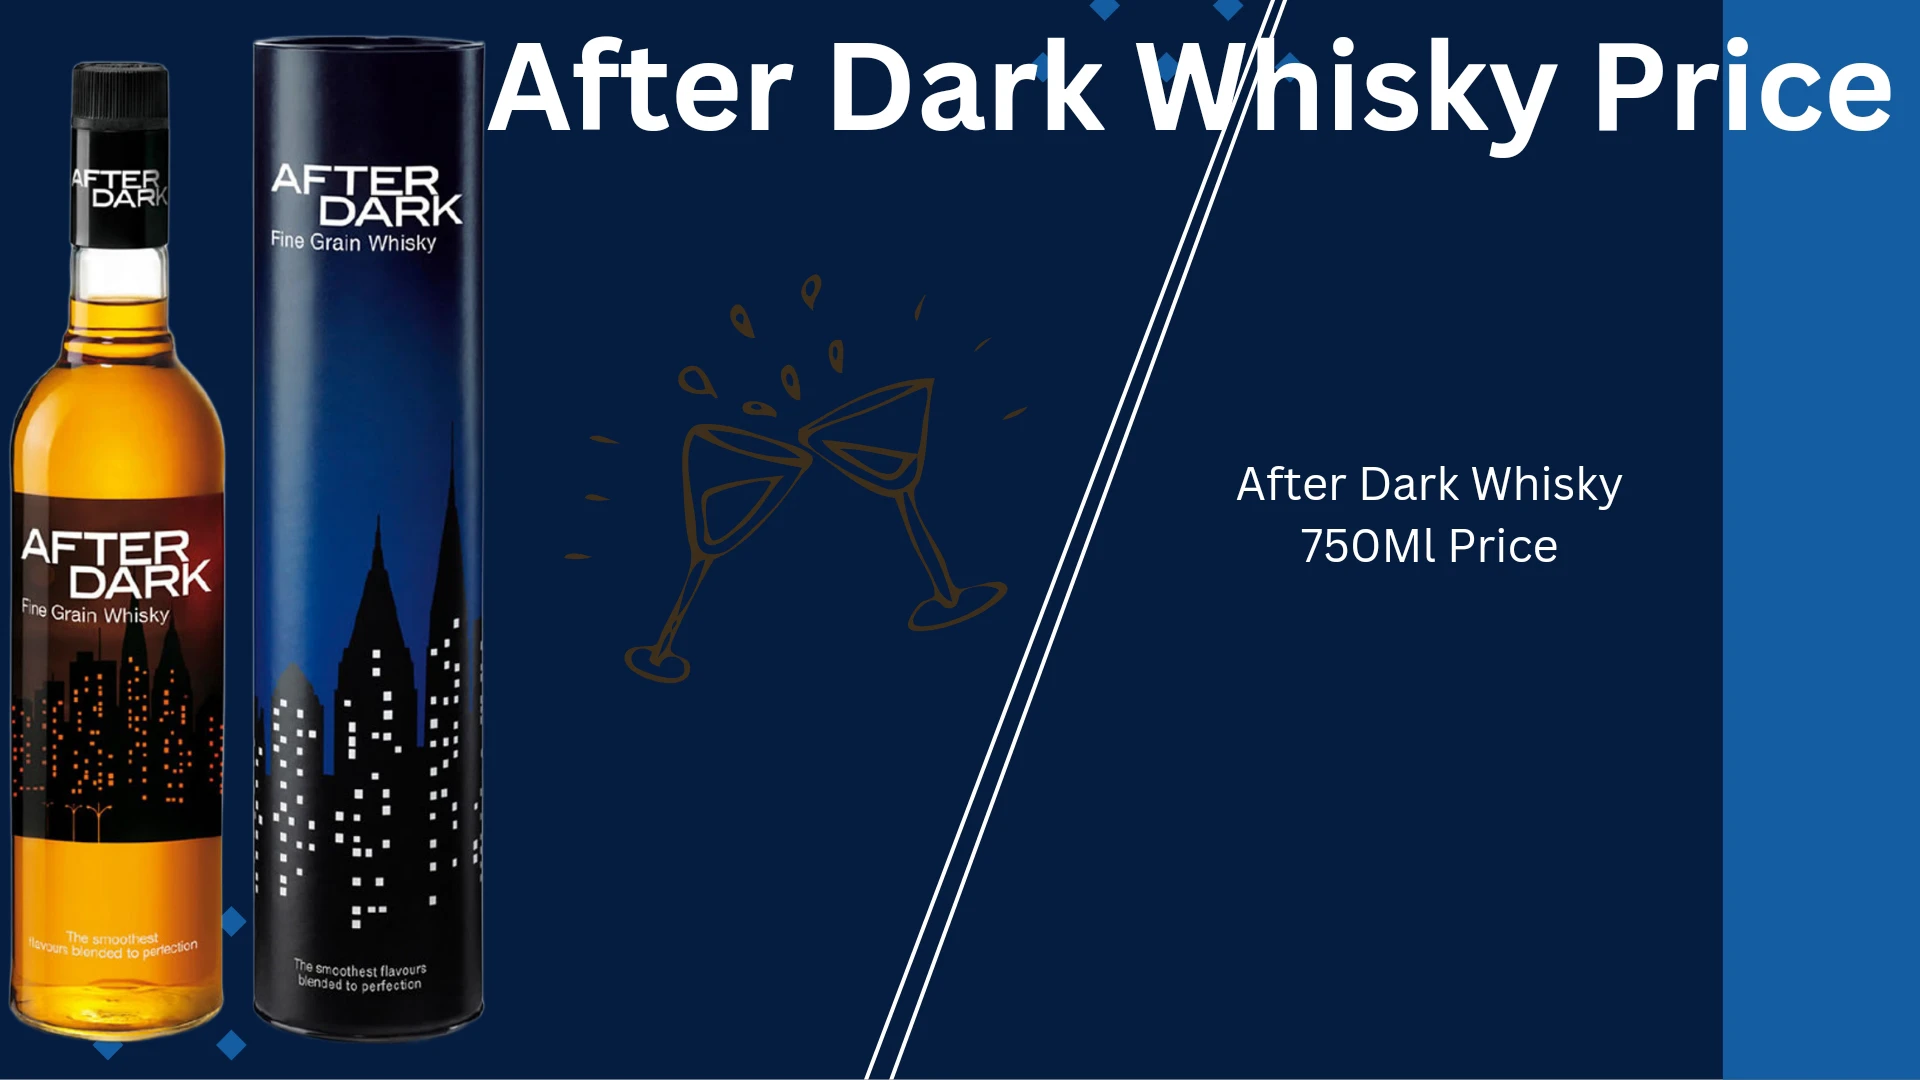 After Dark Whisky Price